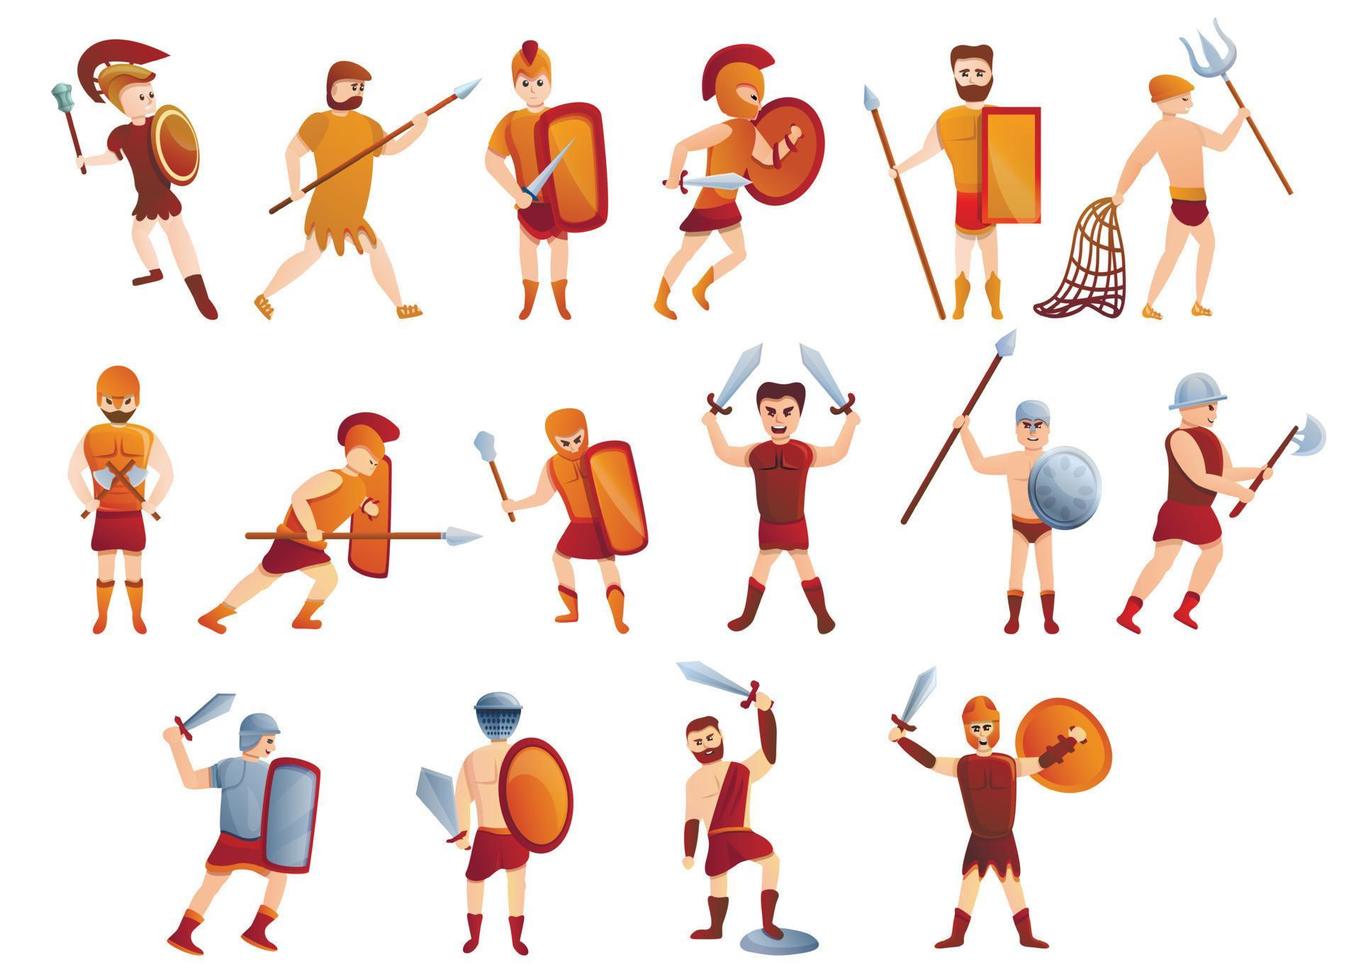 Gladiator-Icons gesetzt, Cartoon-Stil vektor